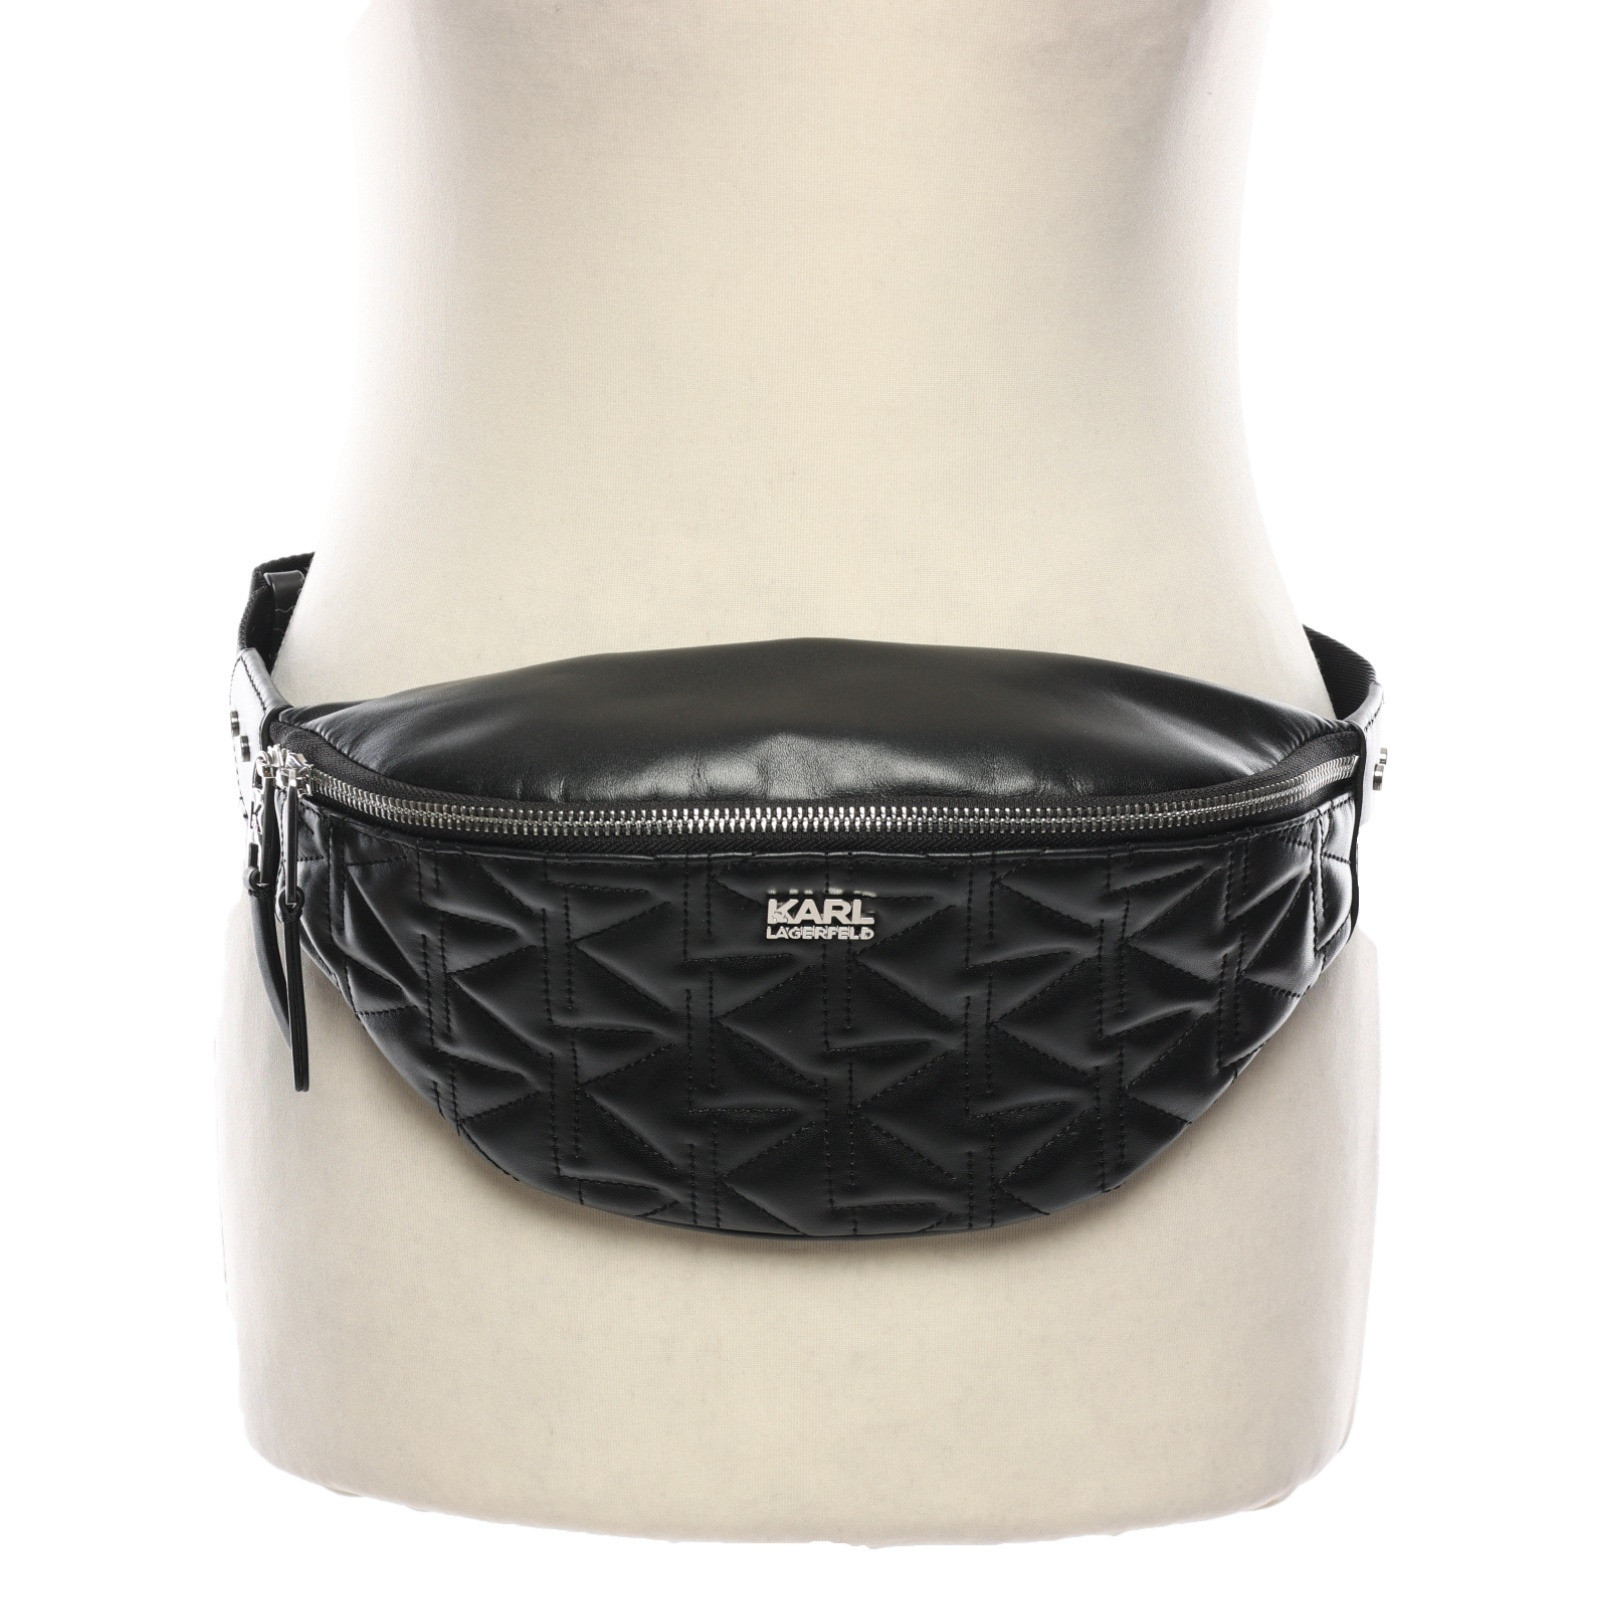 KARL LAGERFELD Women's Handbag Leather in Black